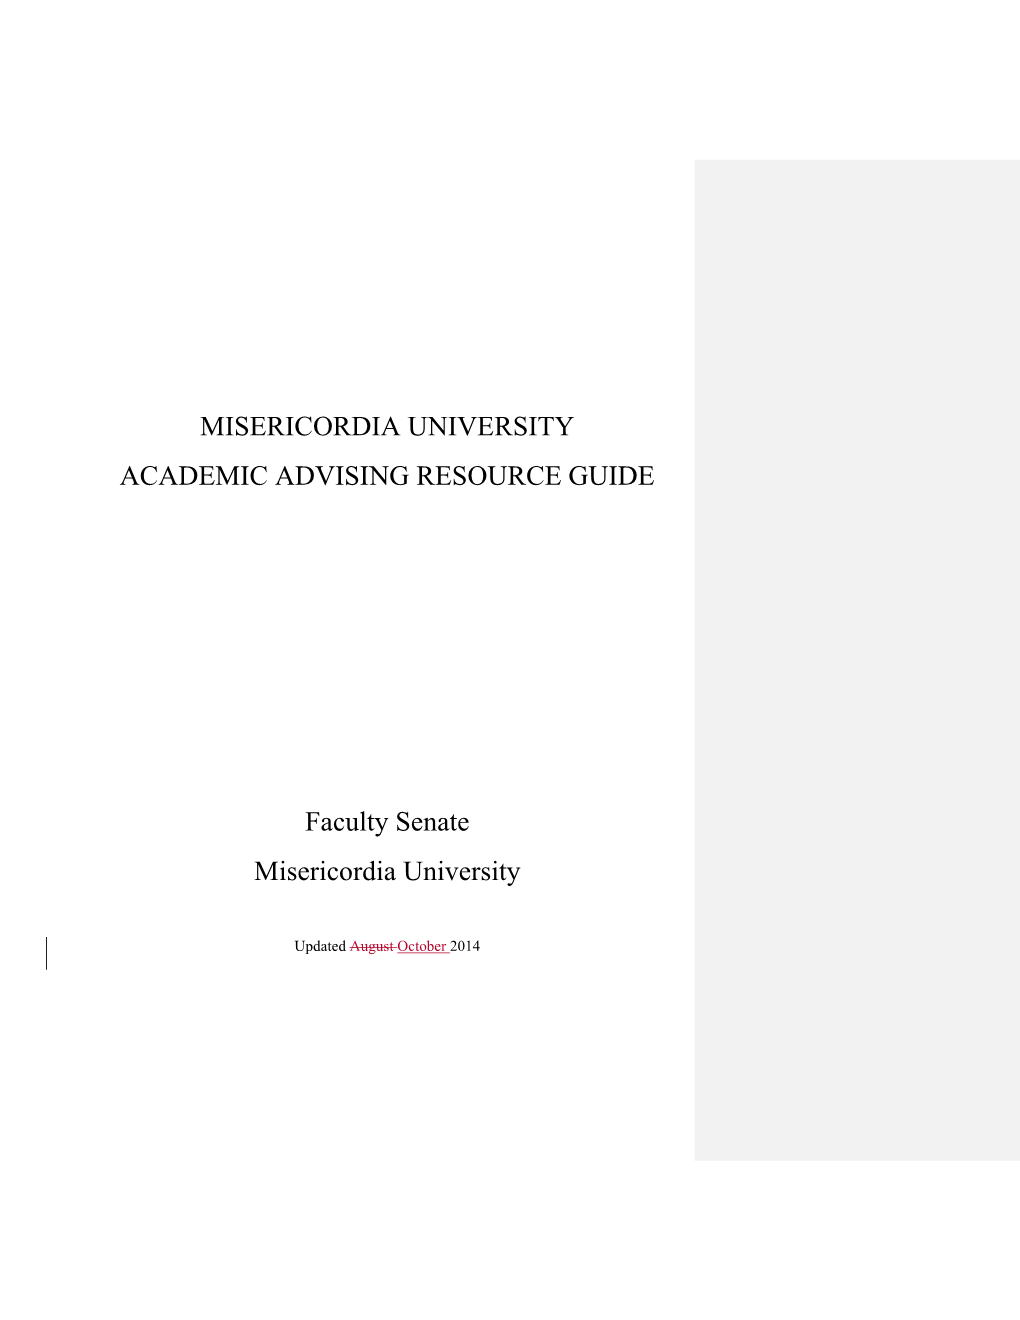 MISERICORDIA UNIVERSITY ACADEMIC ADVISING RESOURCE GUIDE Faculty Senate Misericordia University